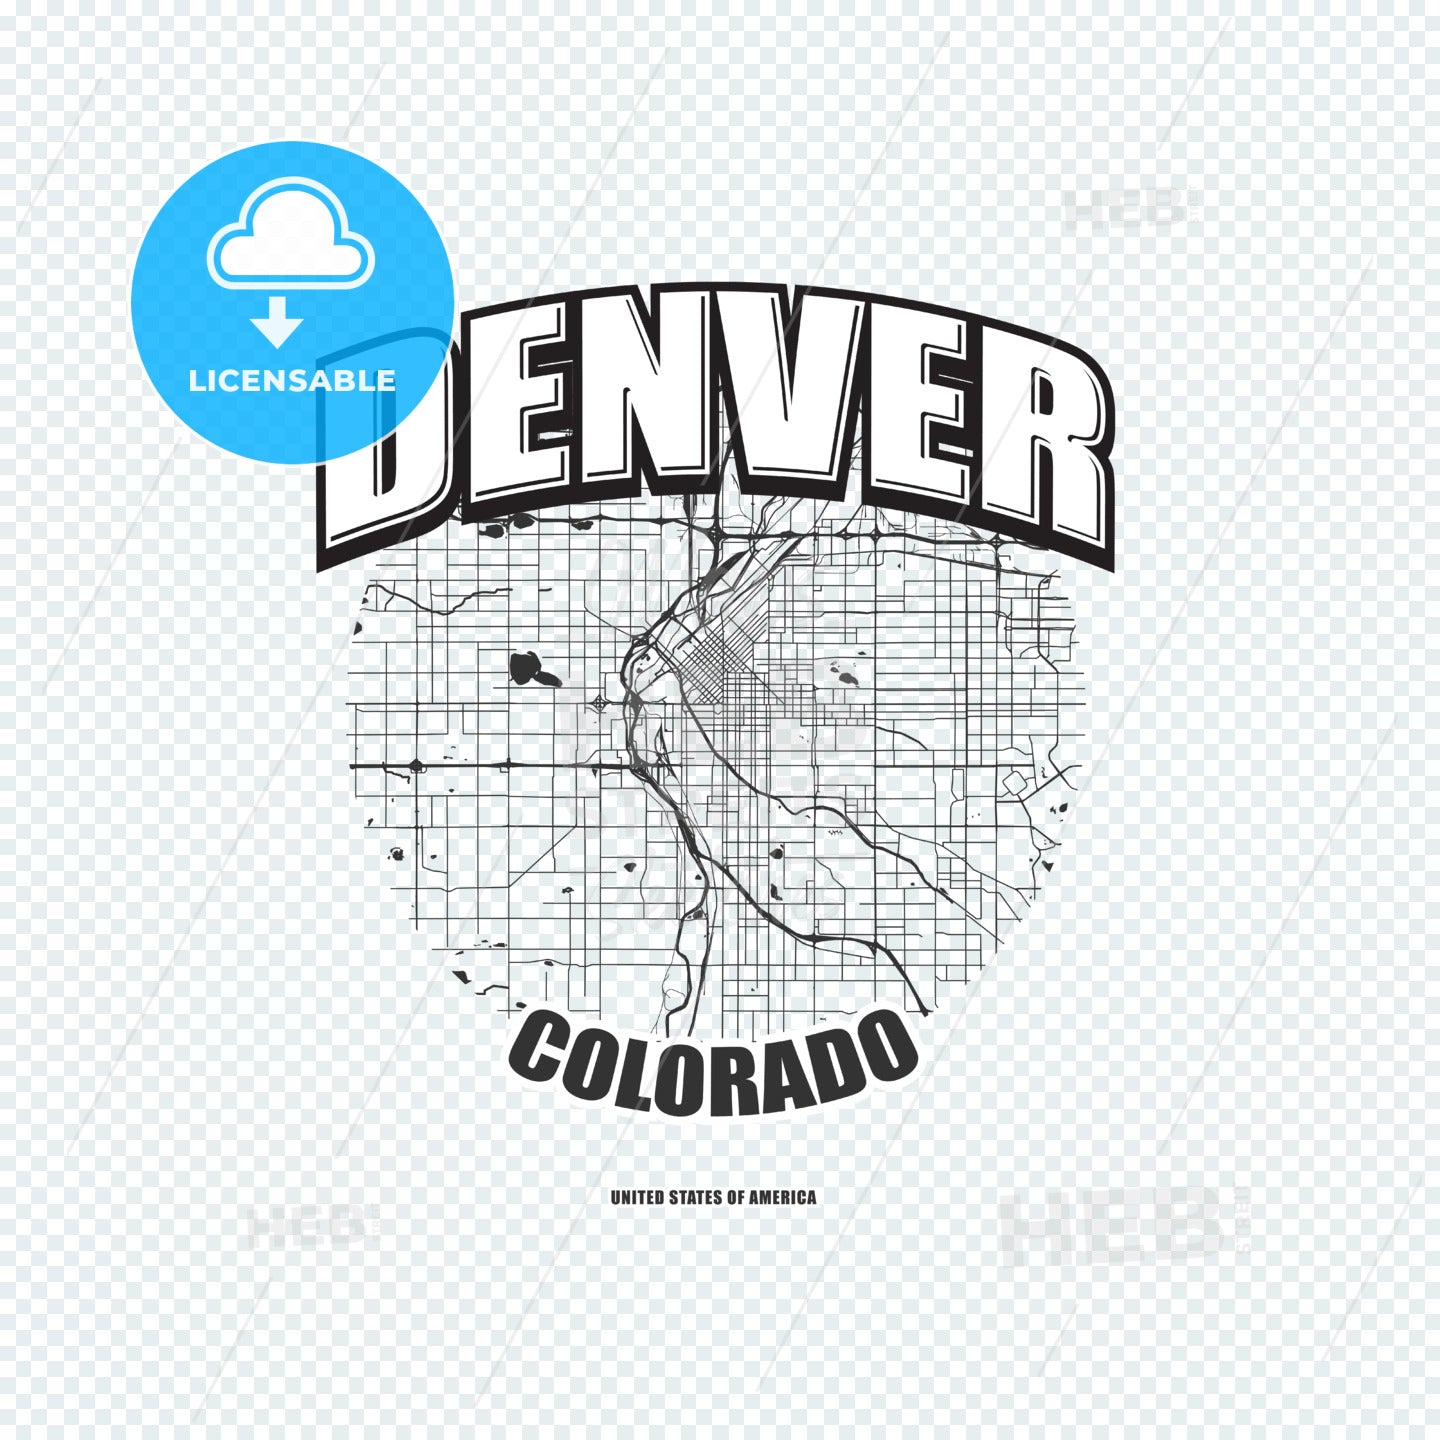 Denver, Colorado, logo artwork – instant download